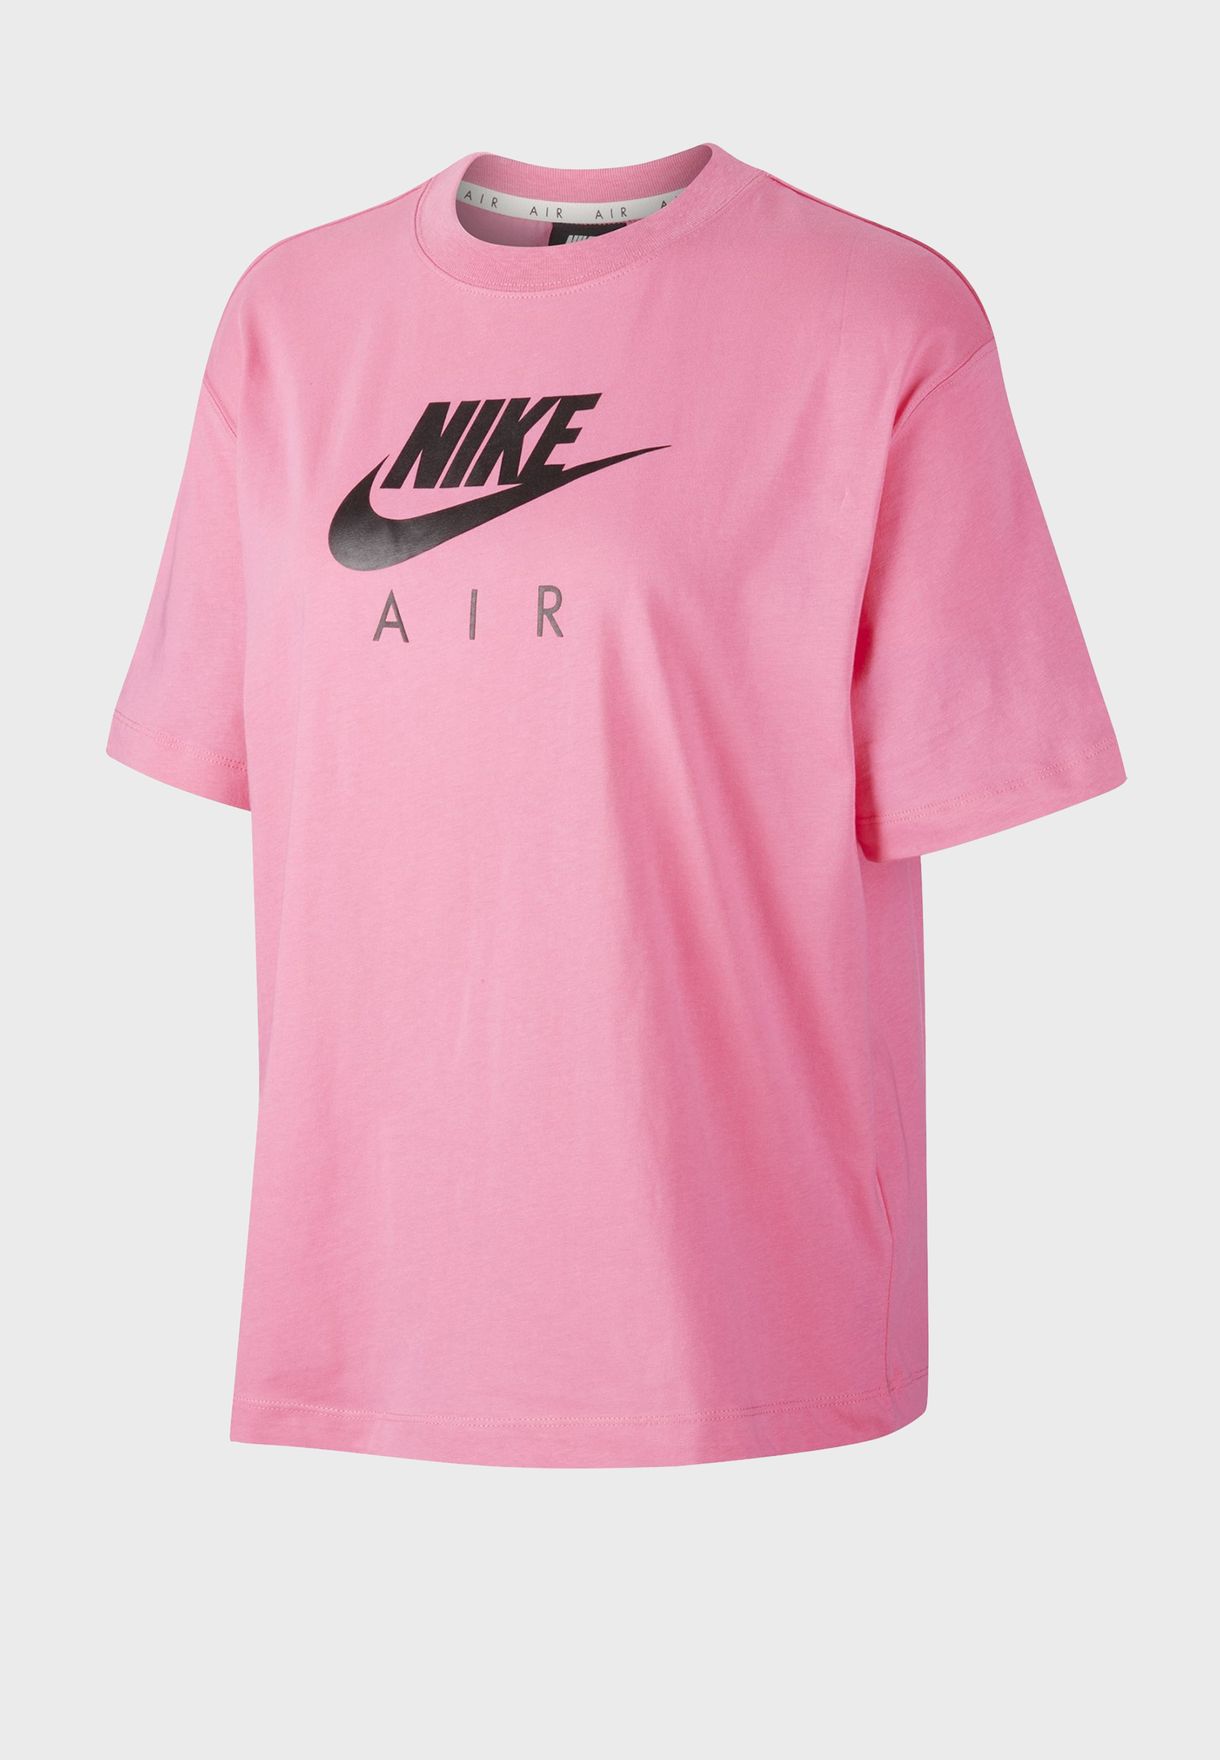 nike boyfriend t shirt pink